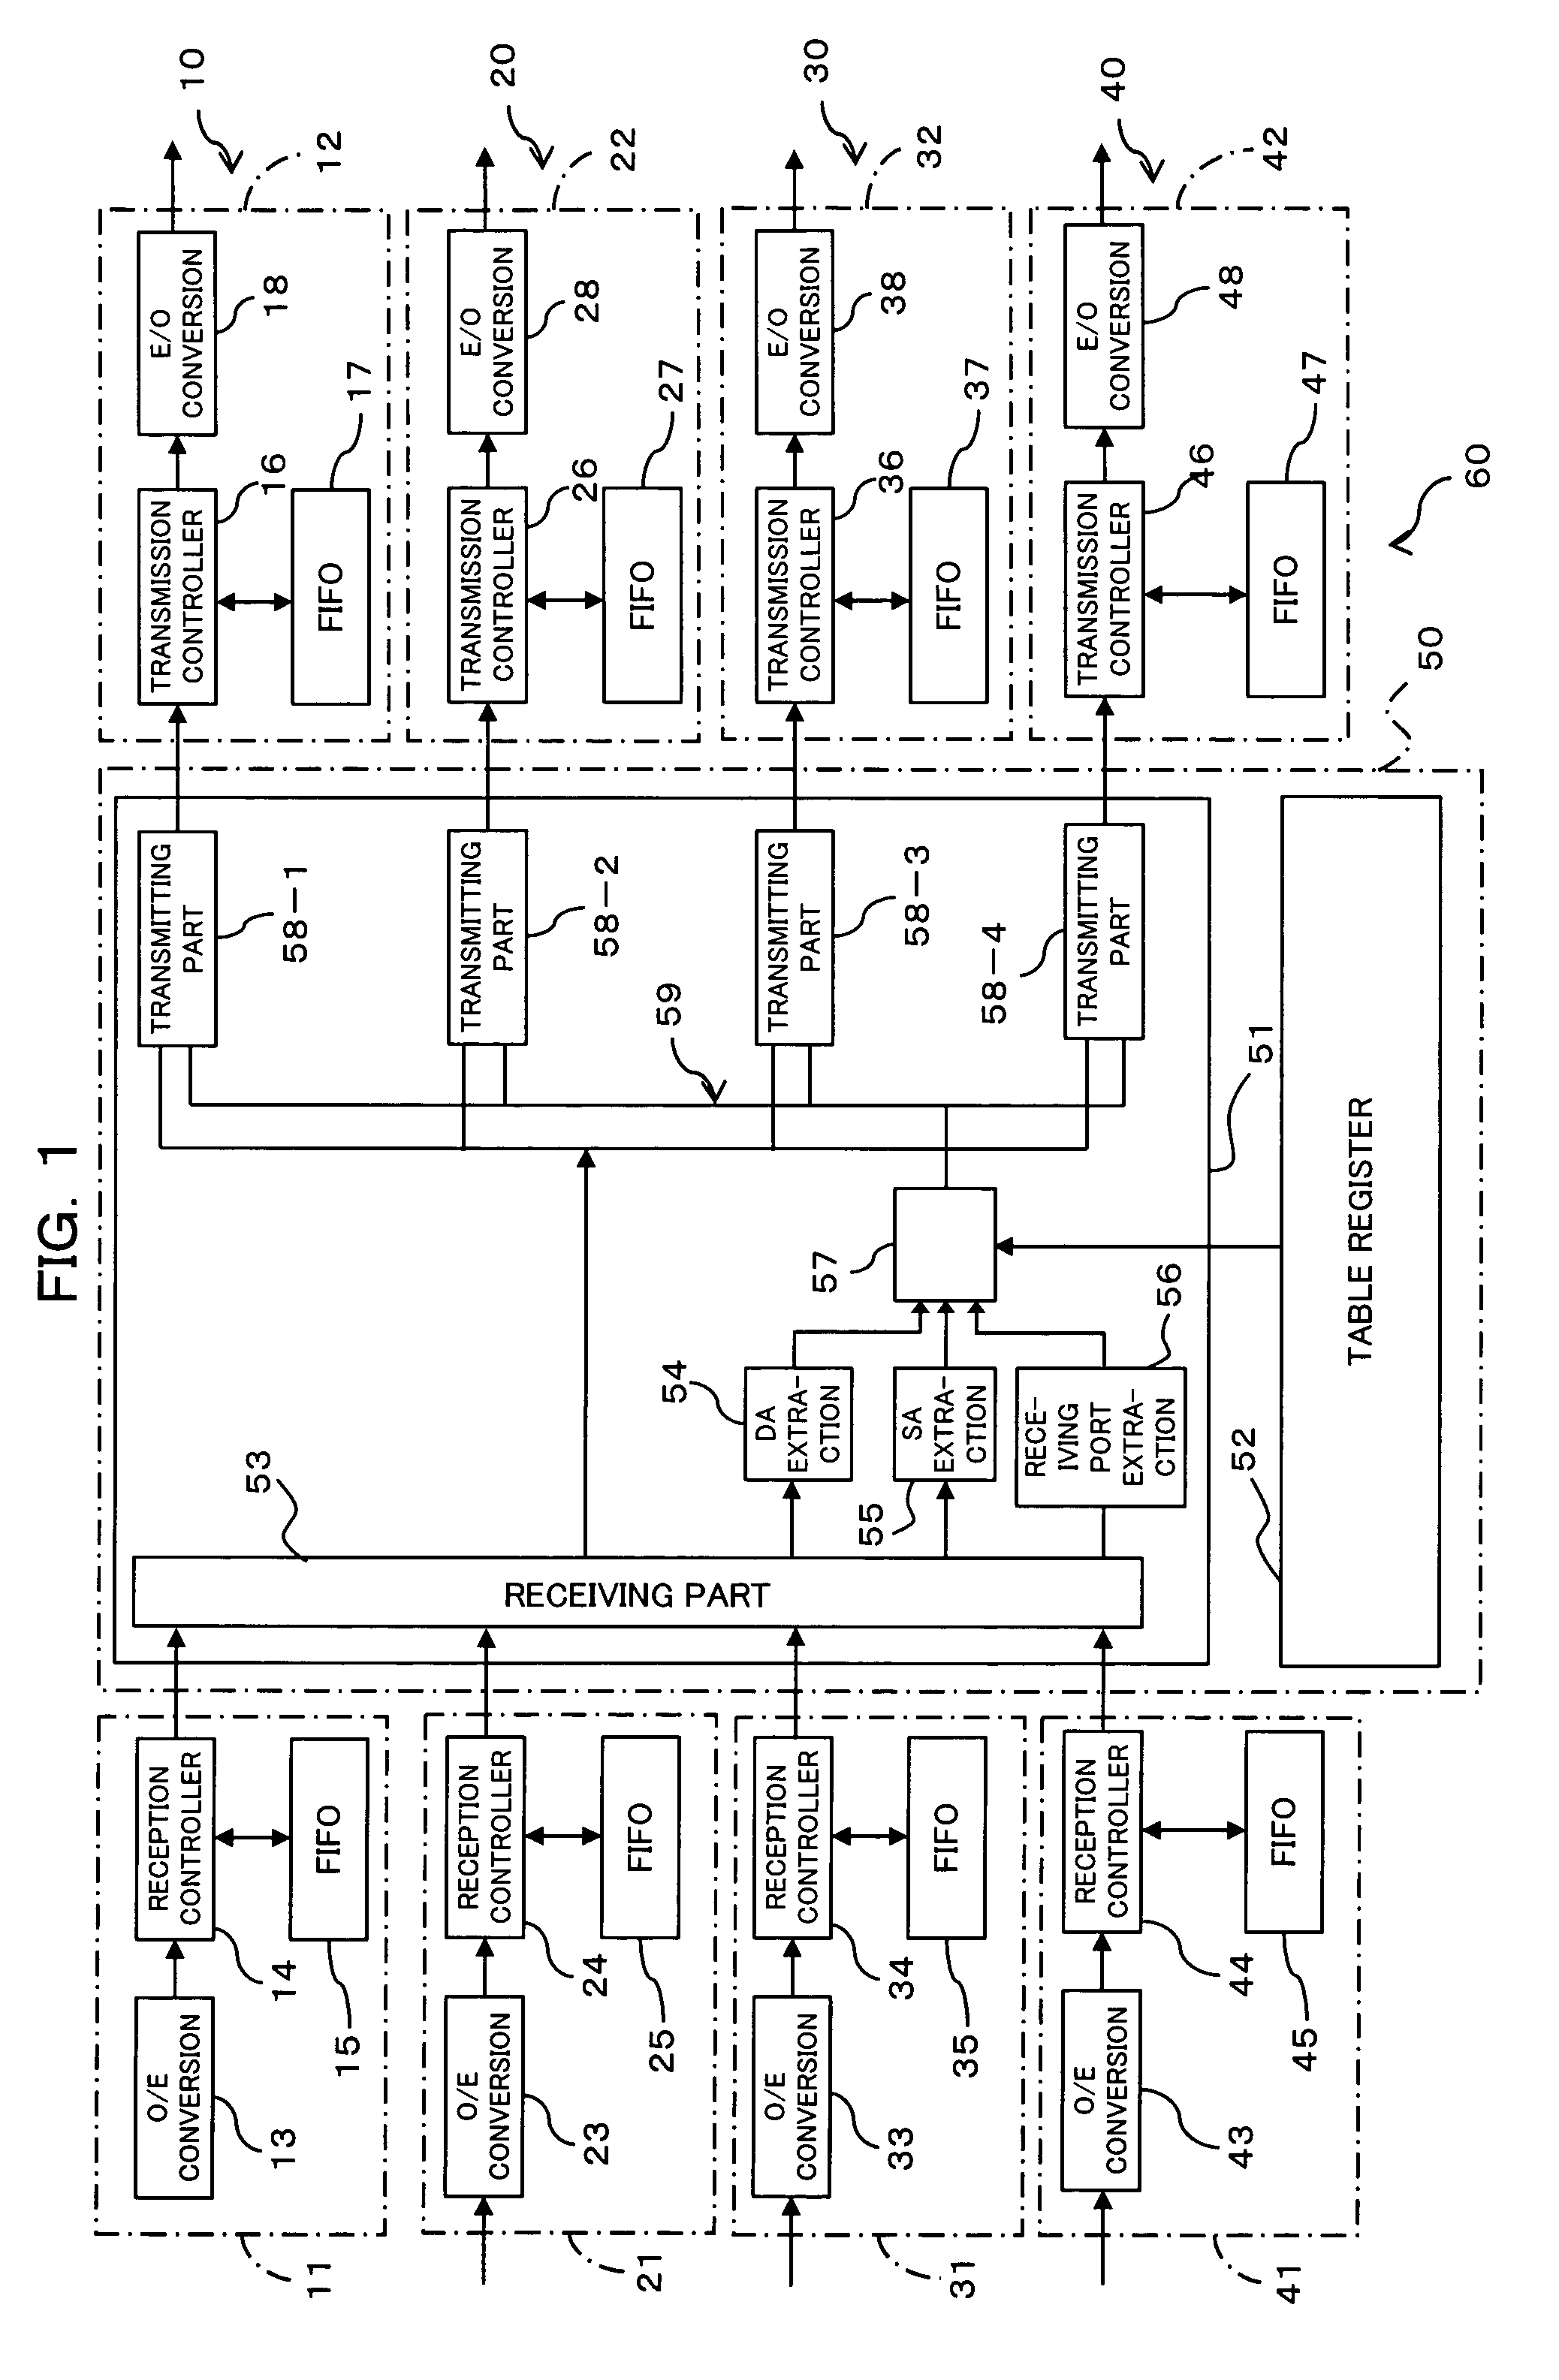 Transmitter and method of transmission